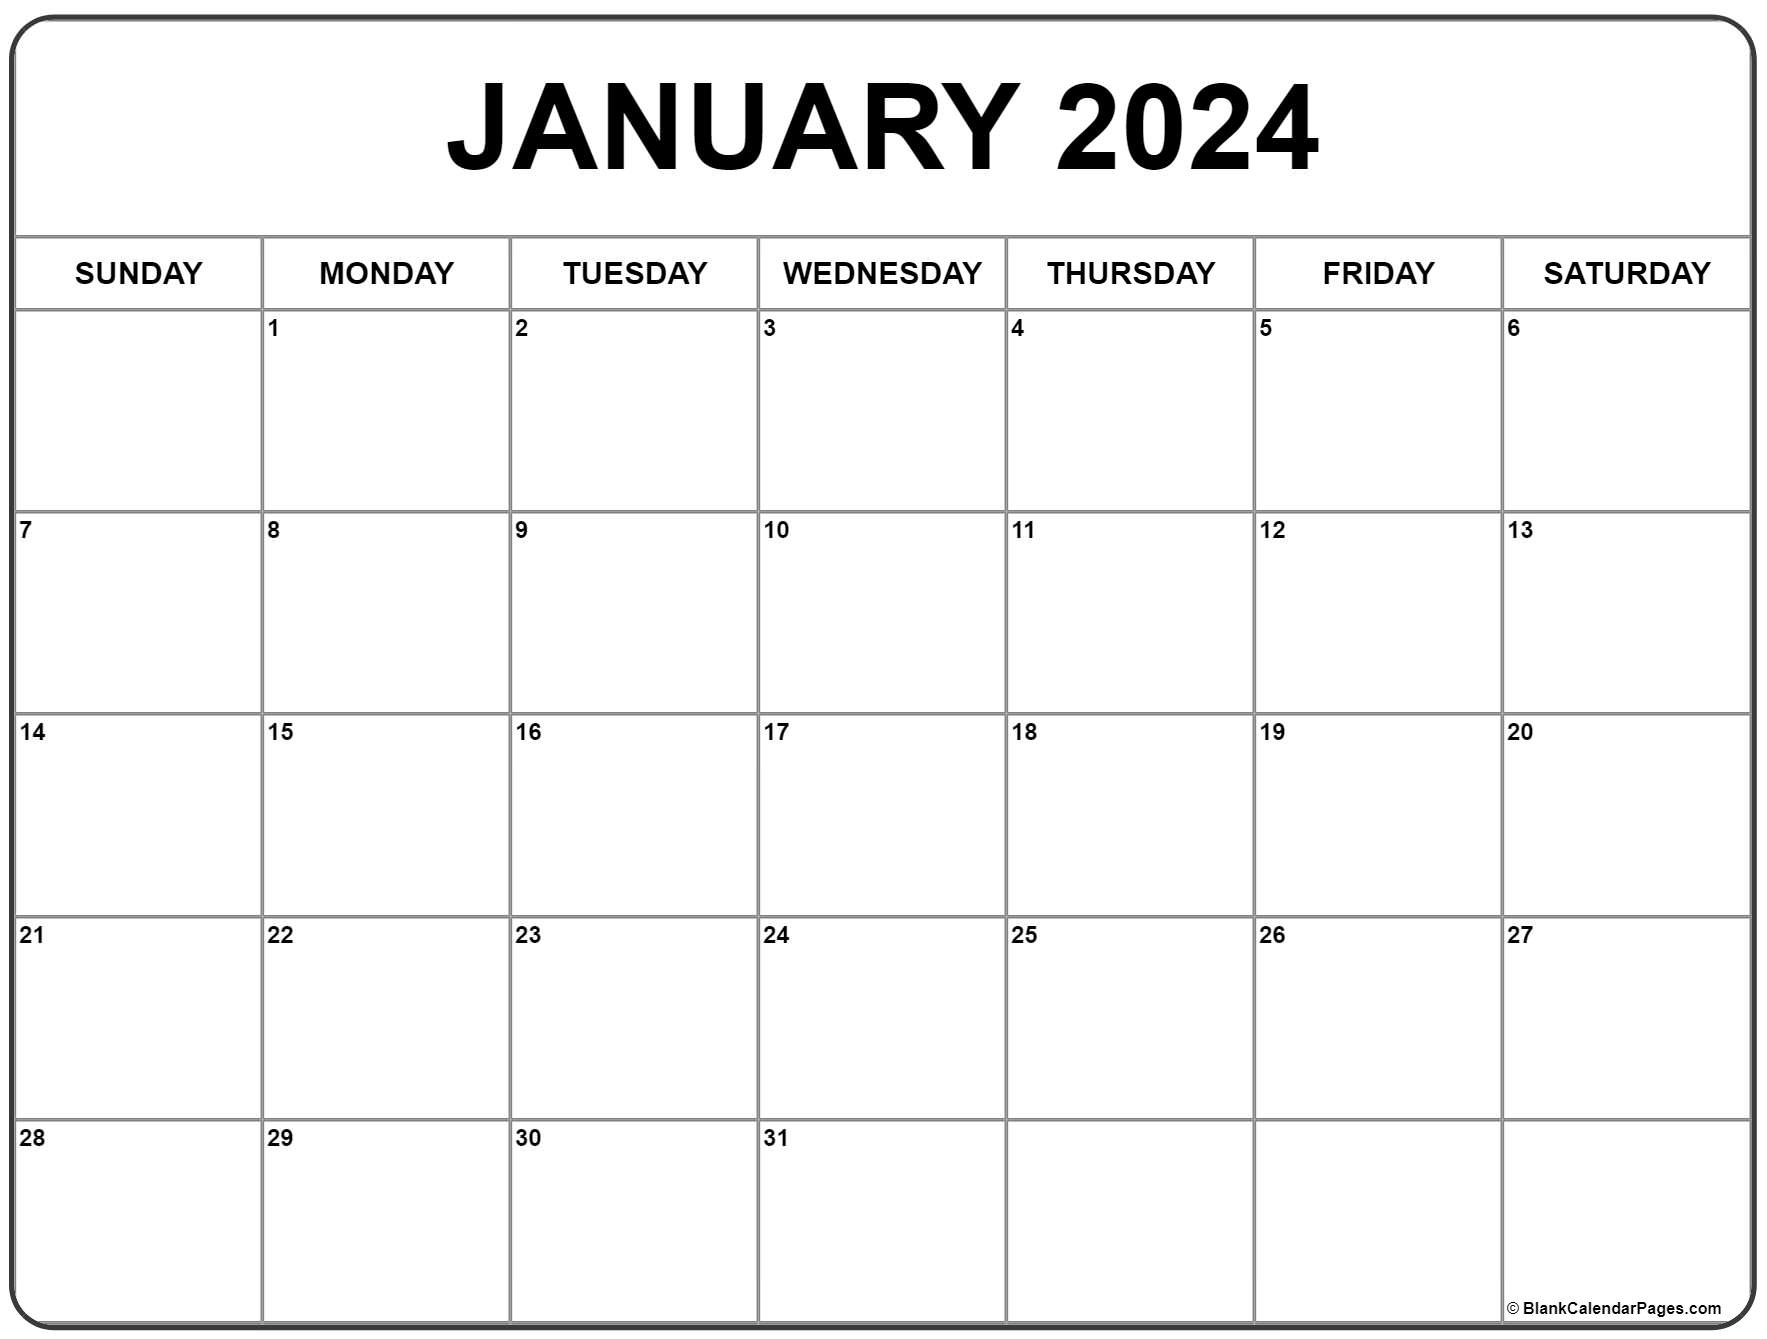 January 2024 Calendar | Free Printable Calendar for Monthly Calendar 2024 Free Printable